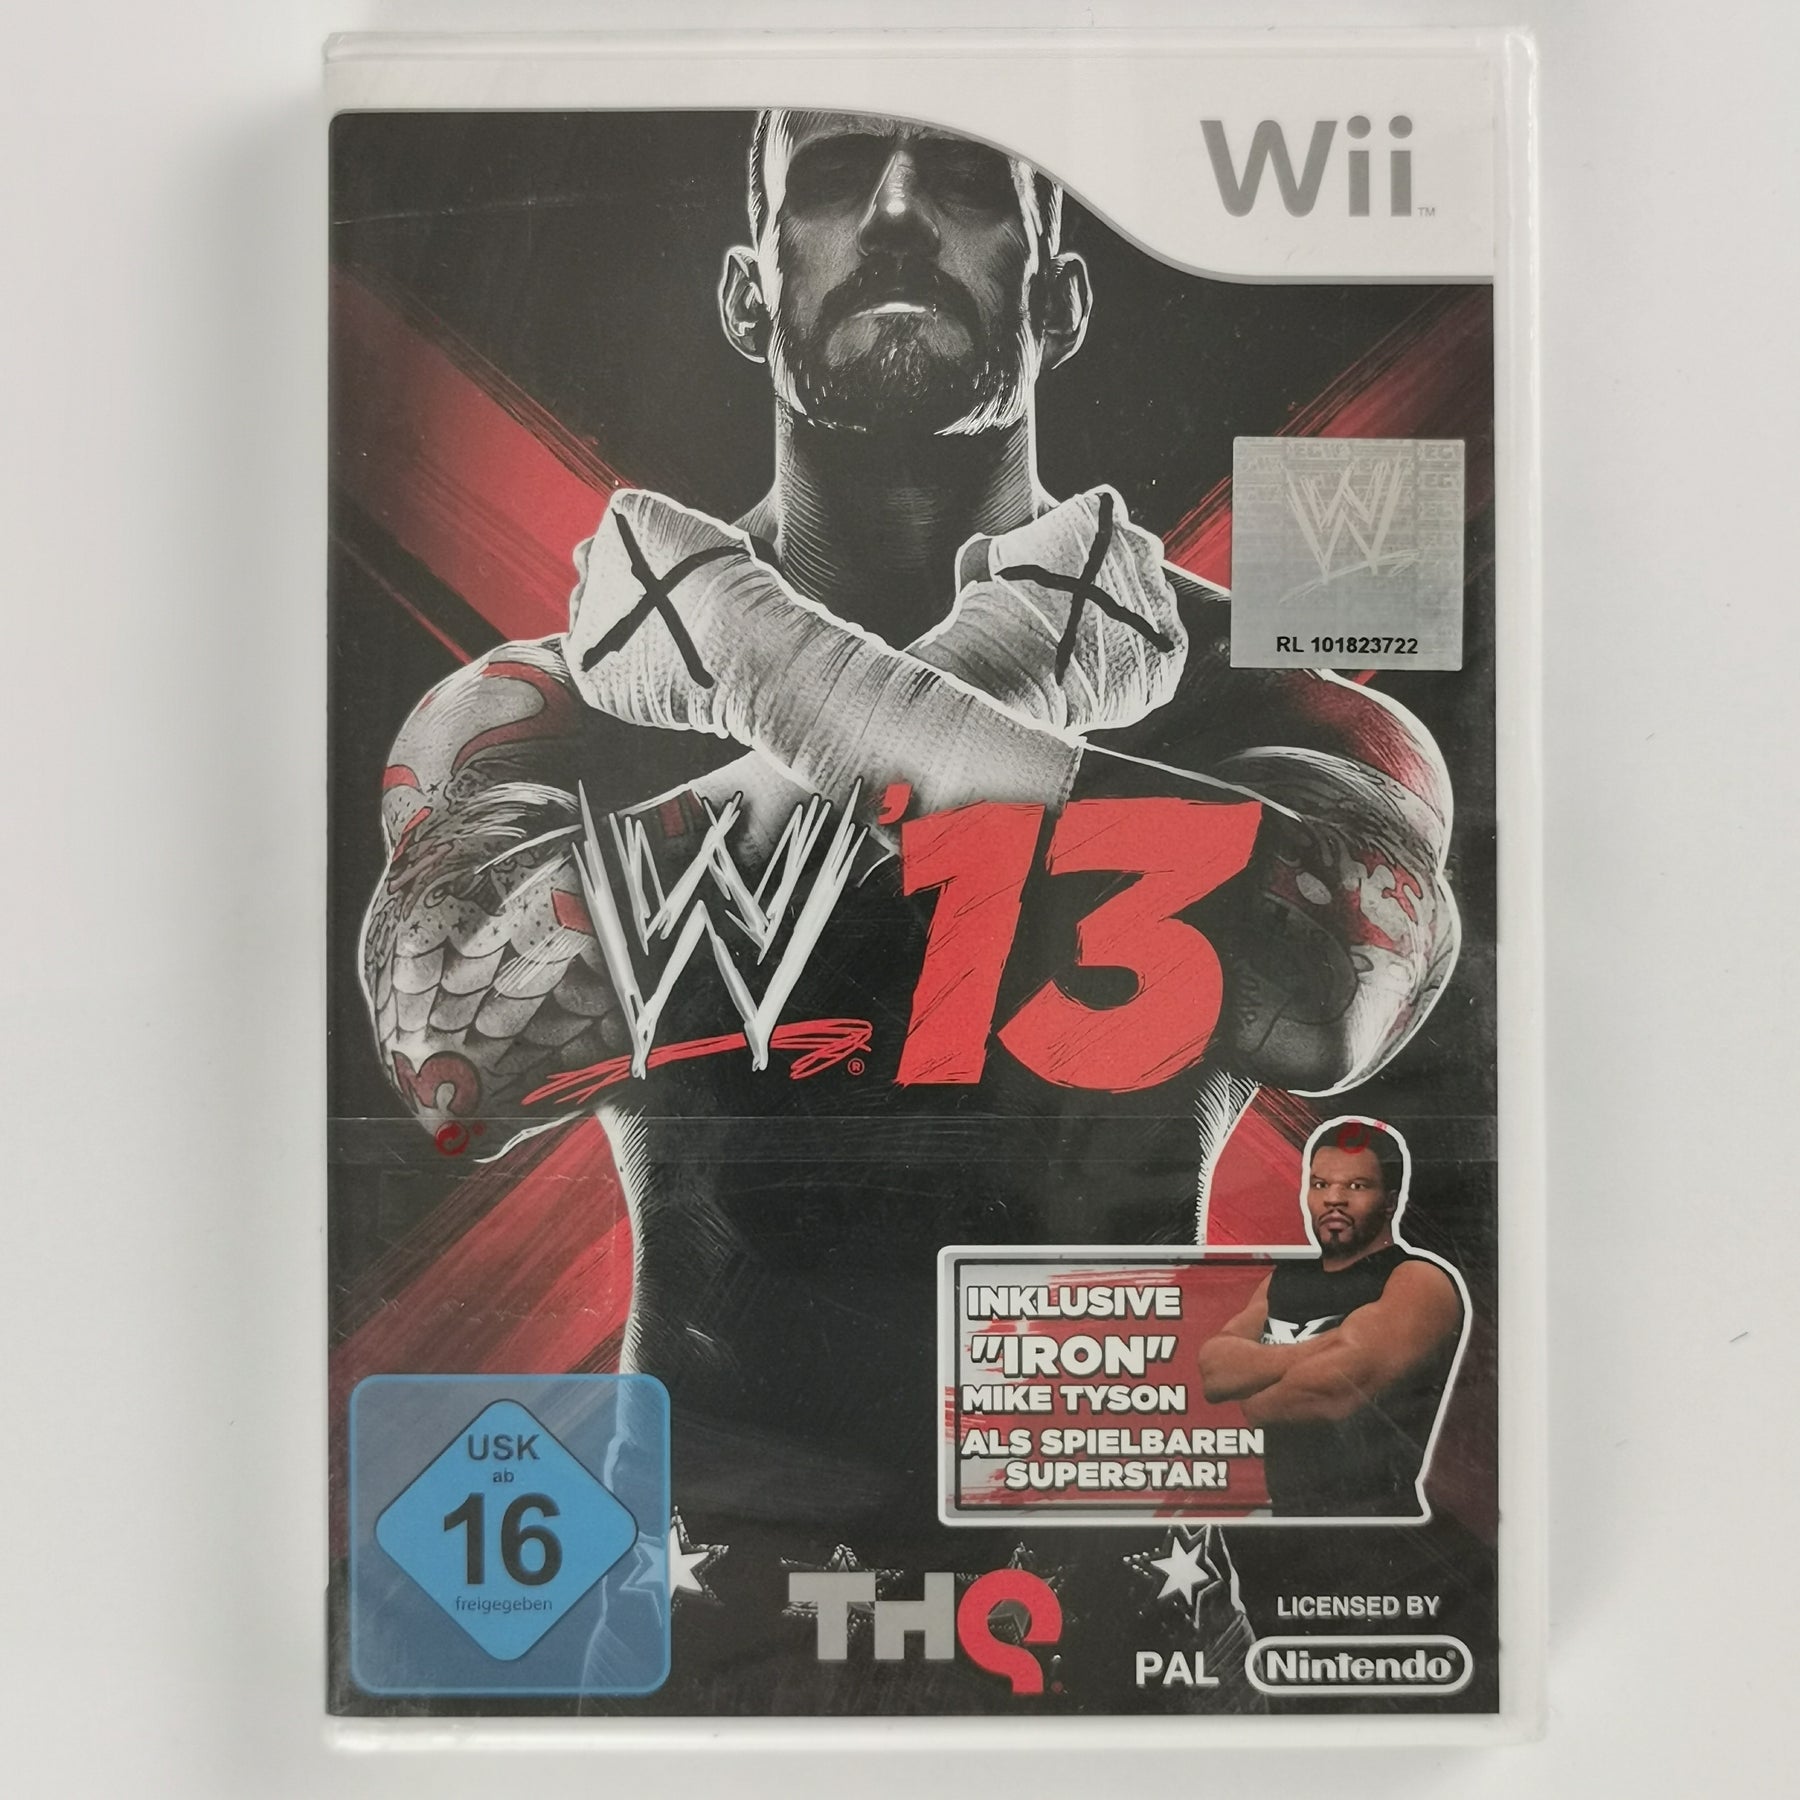 WWE 13 THQ Nintendo WII [Wii]